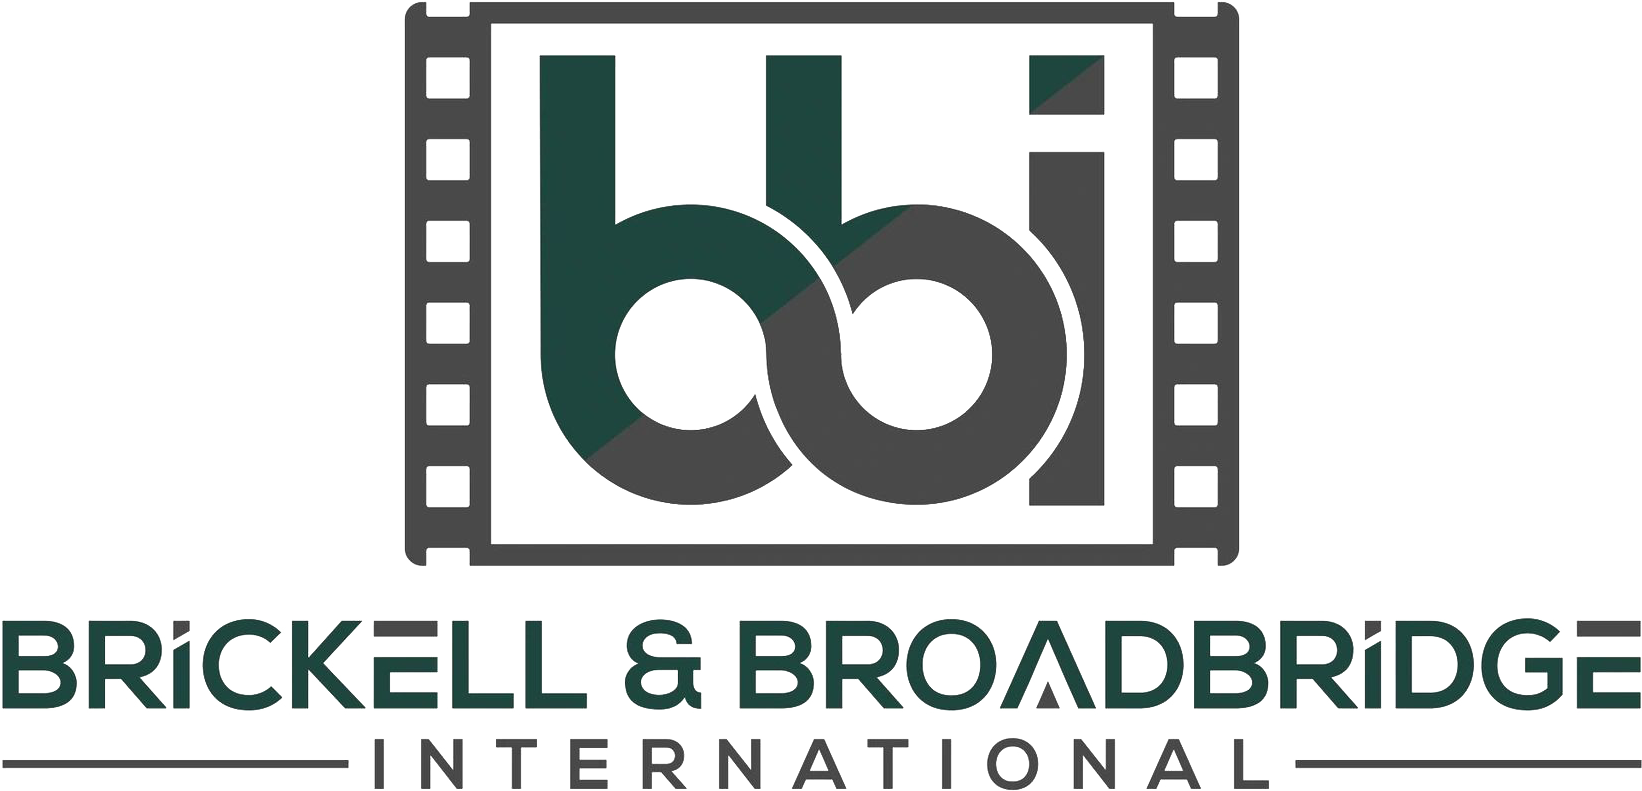 Brickell & Broadbridge International